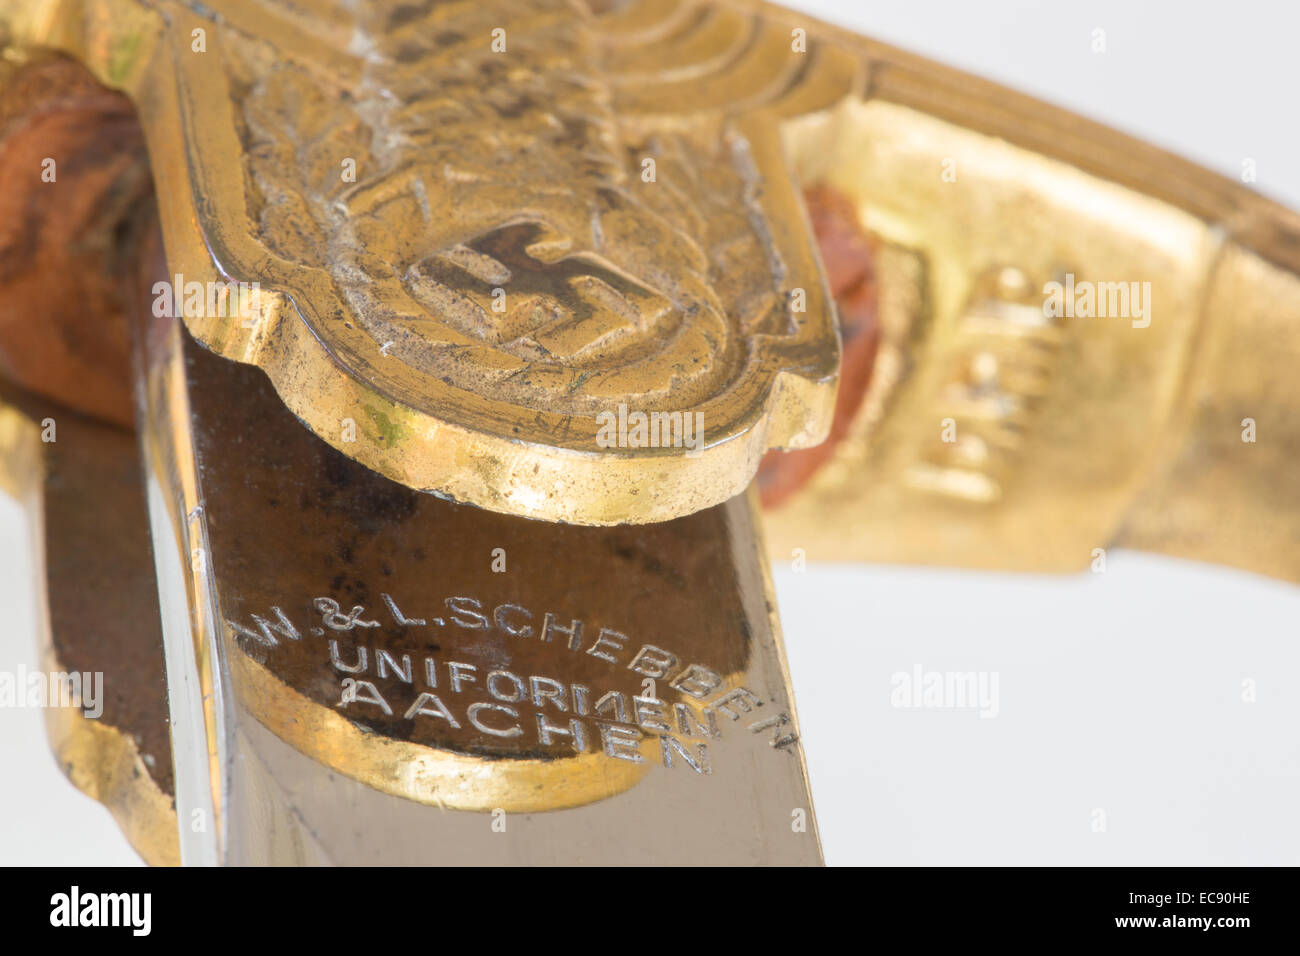 Close up detail of a 1940s WWII Nazi military dress sword showing W. & L. Schebben Uniforimen Aachen, the distributor's marking Stock Photo